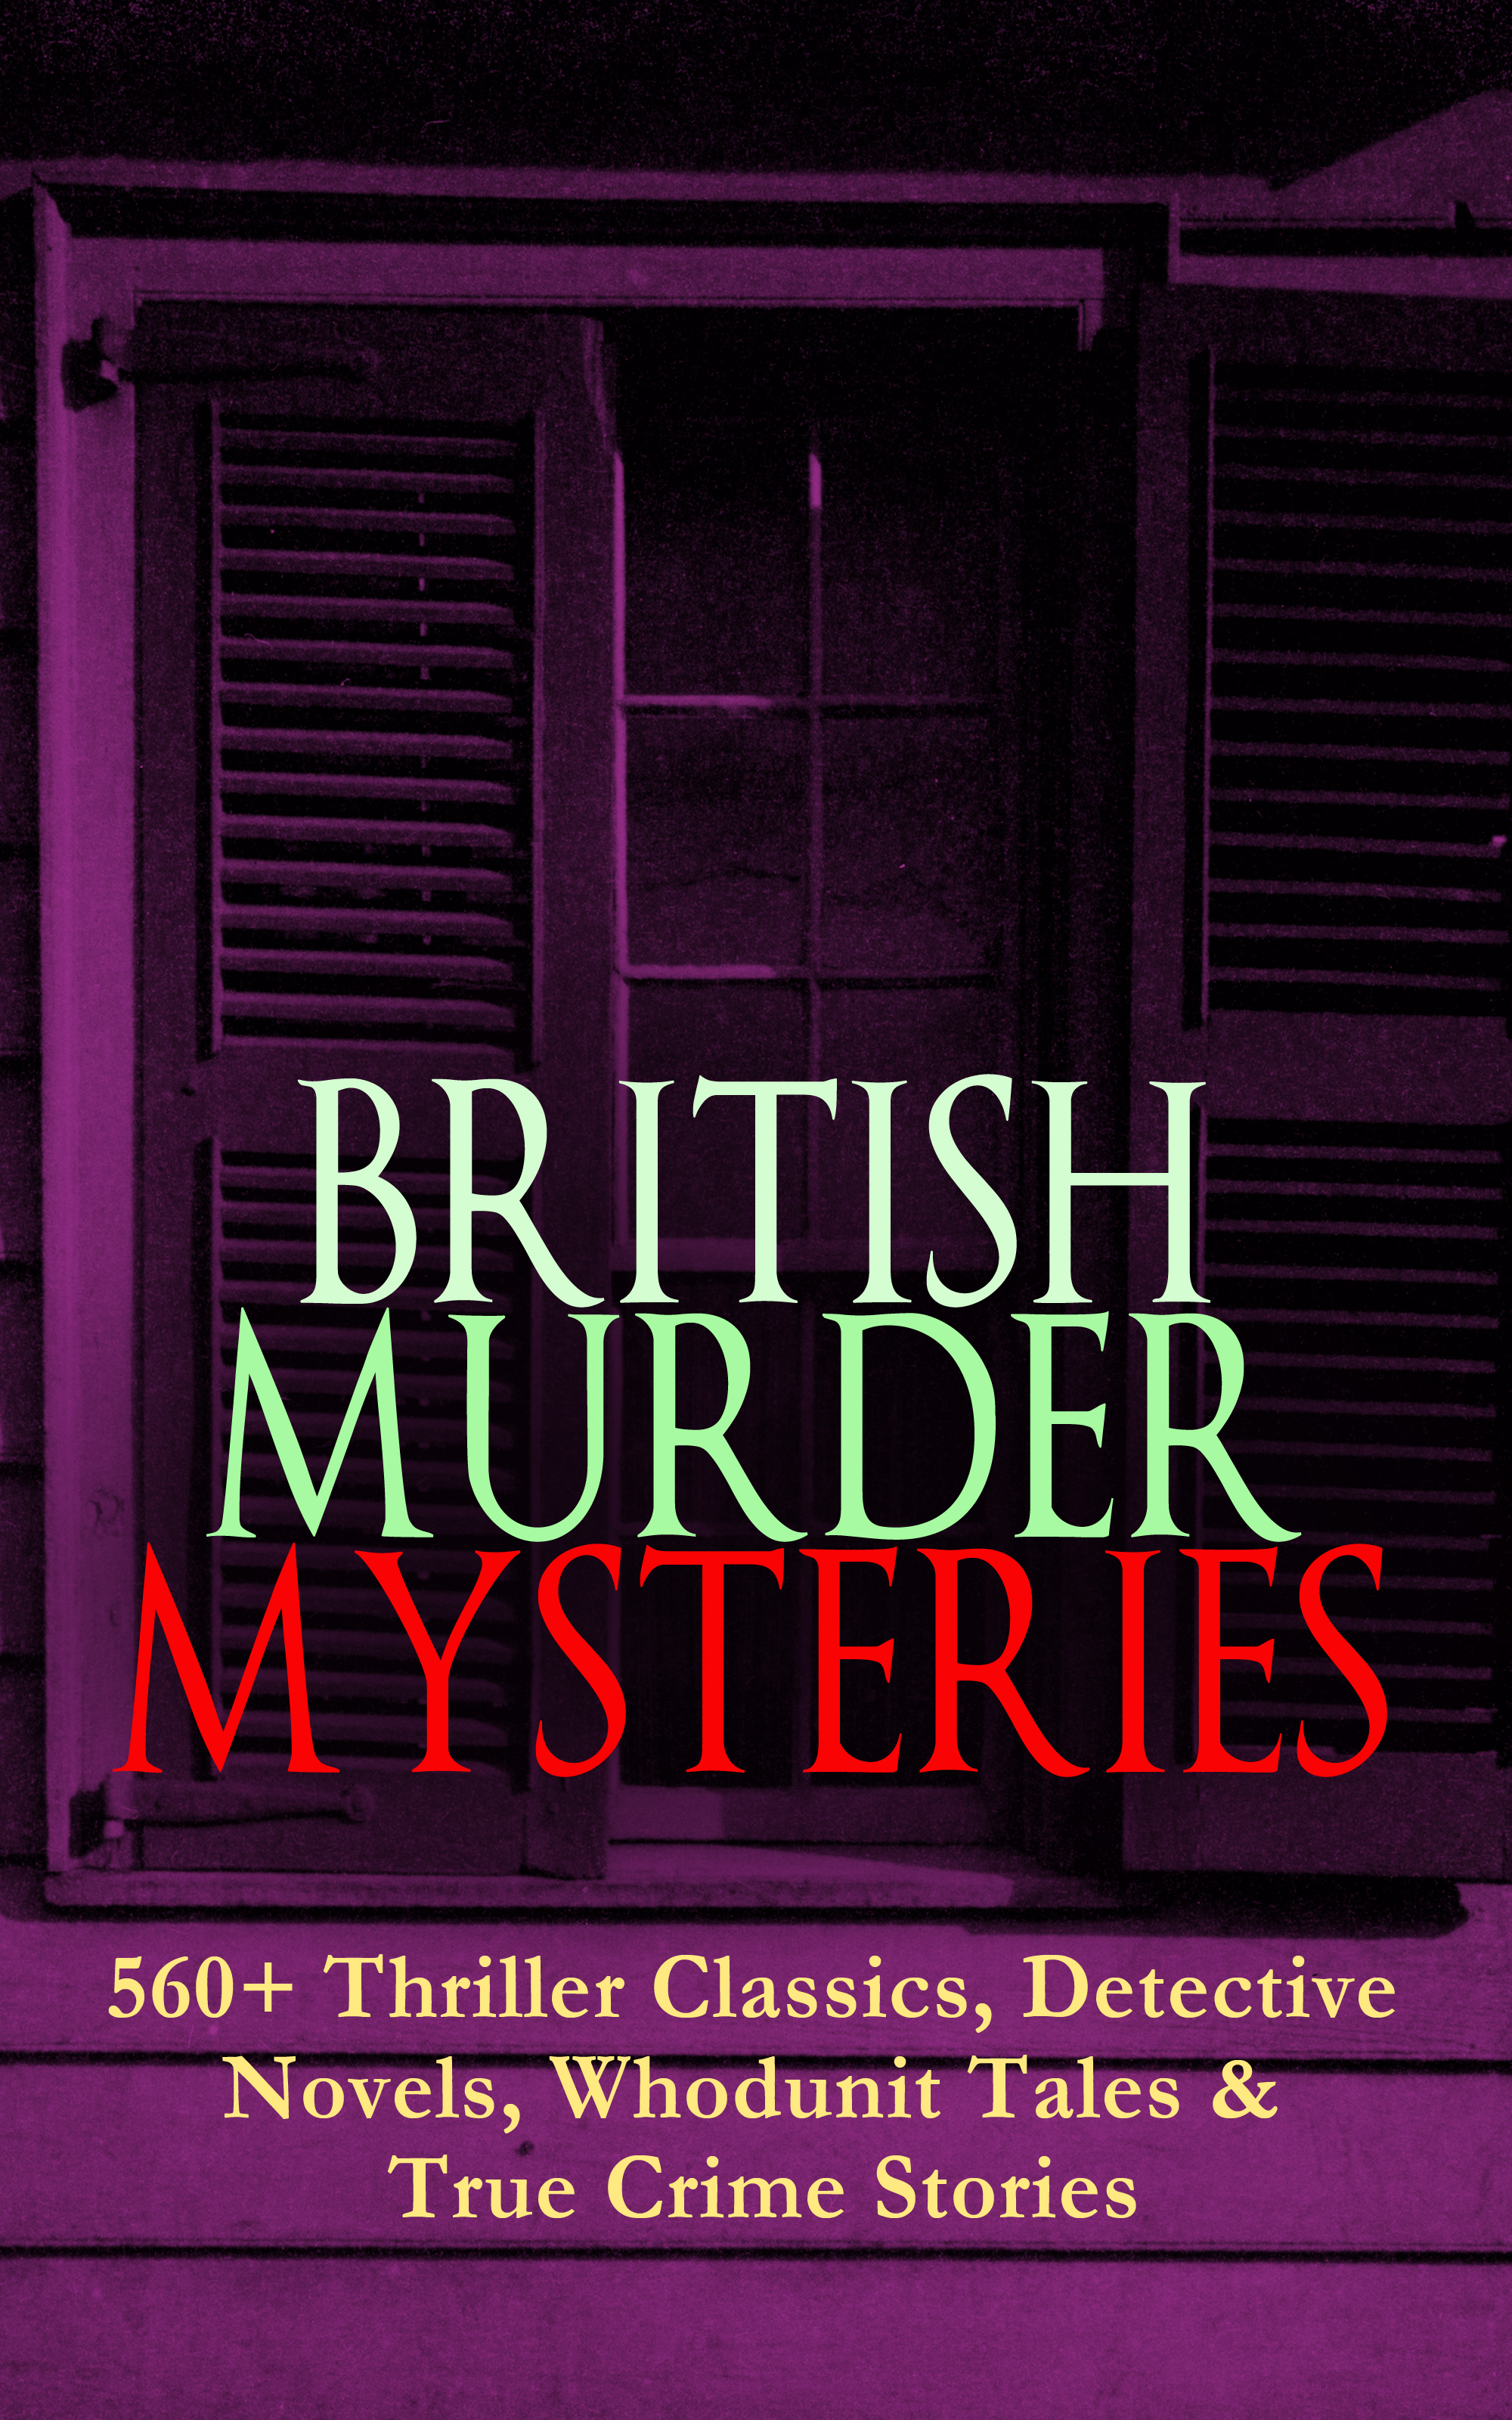 BRITISH MURDER MYSTERIES 560+ Thriller Classics, Detective Novels